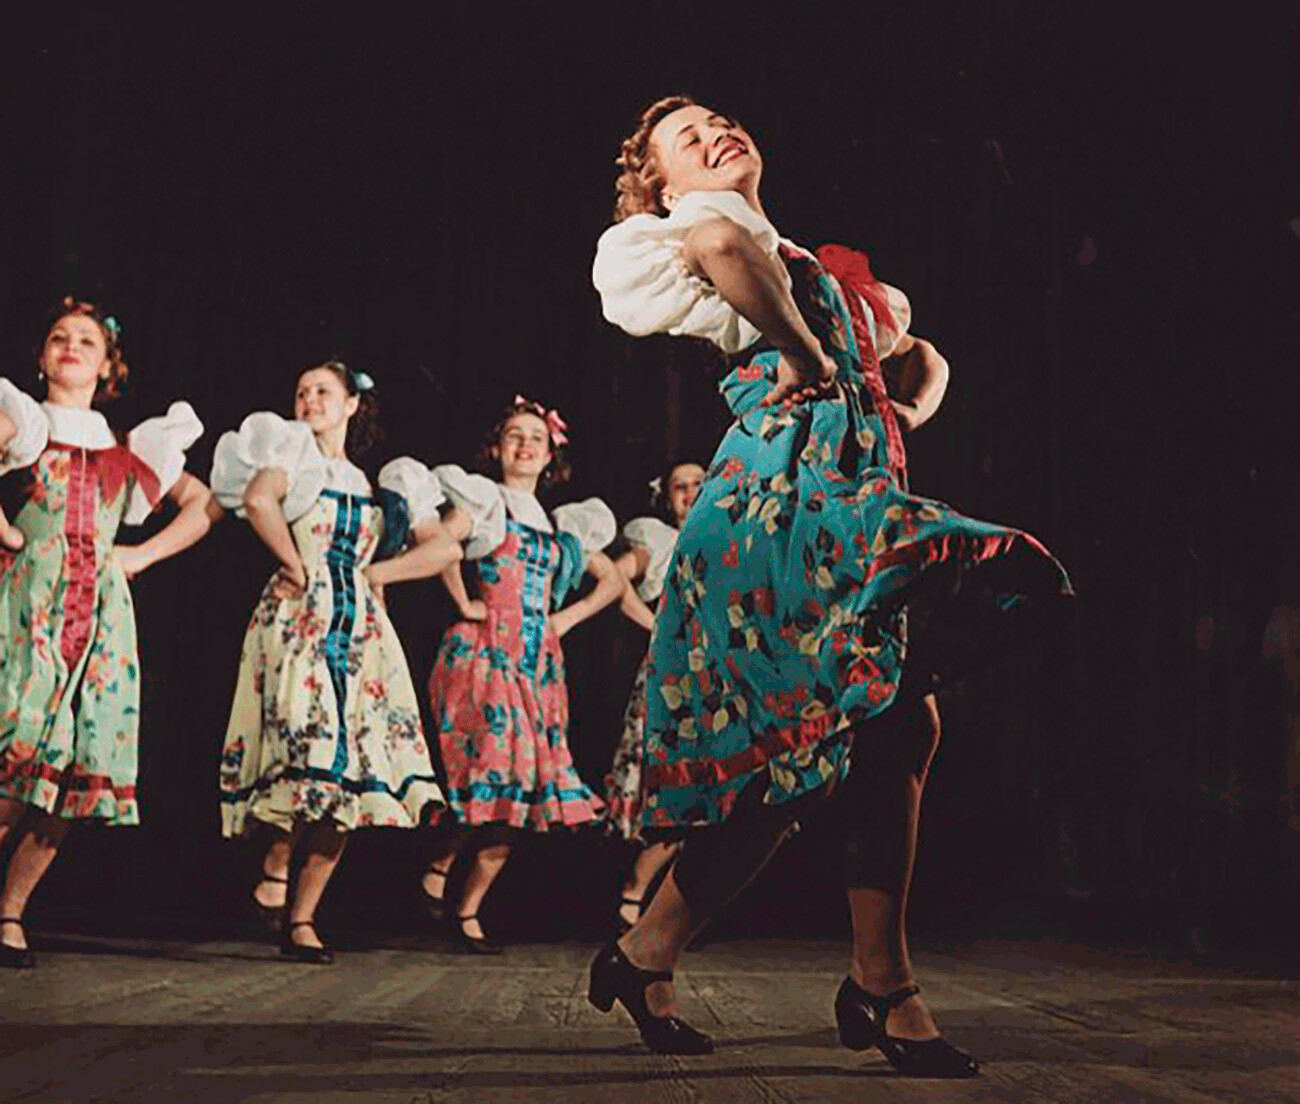 Conjunto de danza folclórica de la URSS

